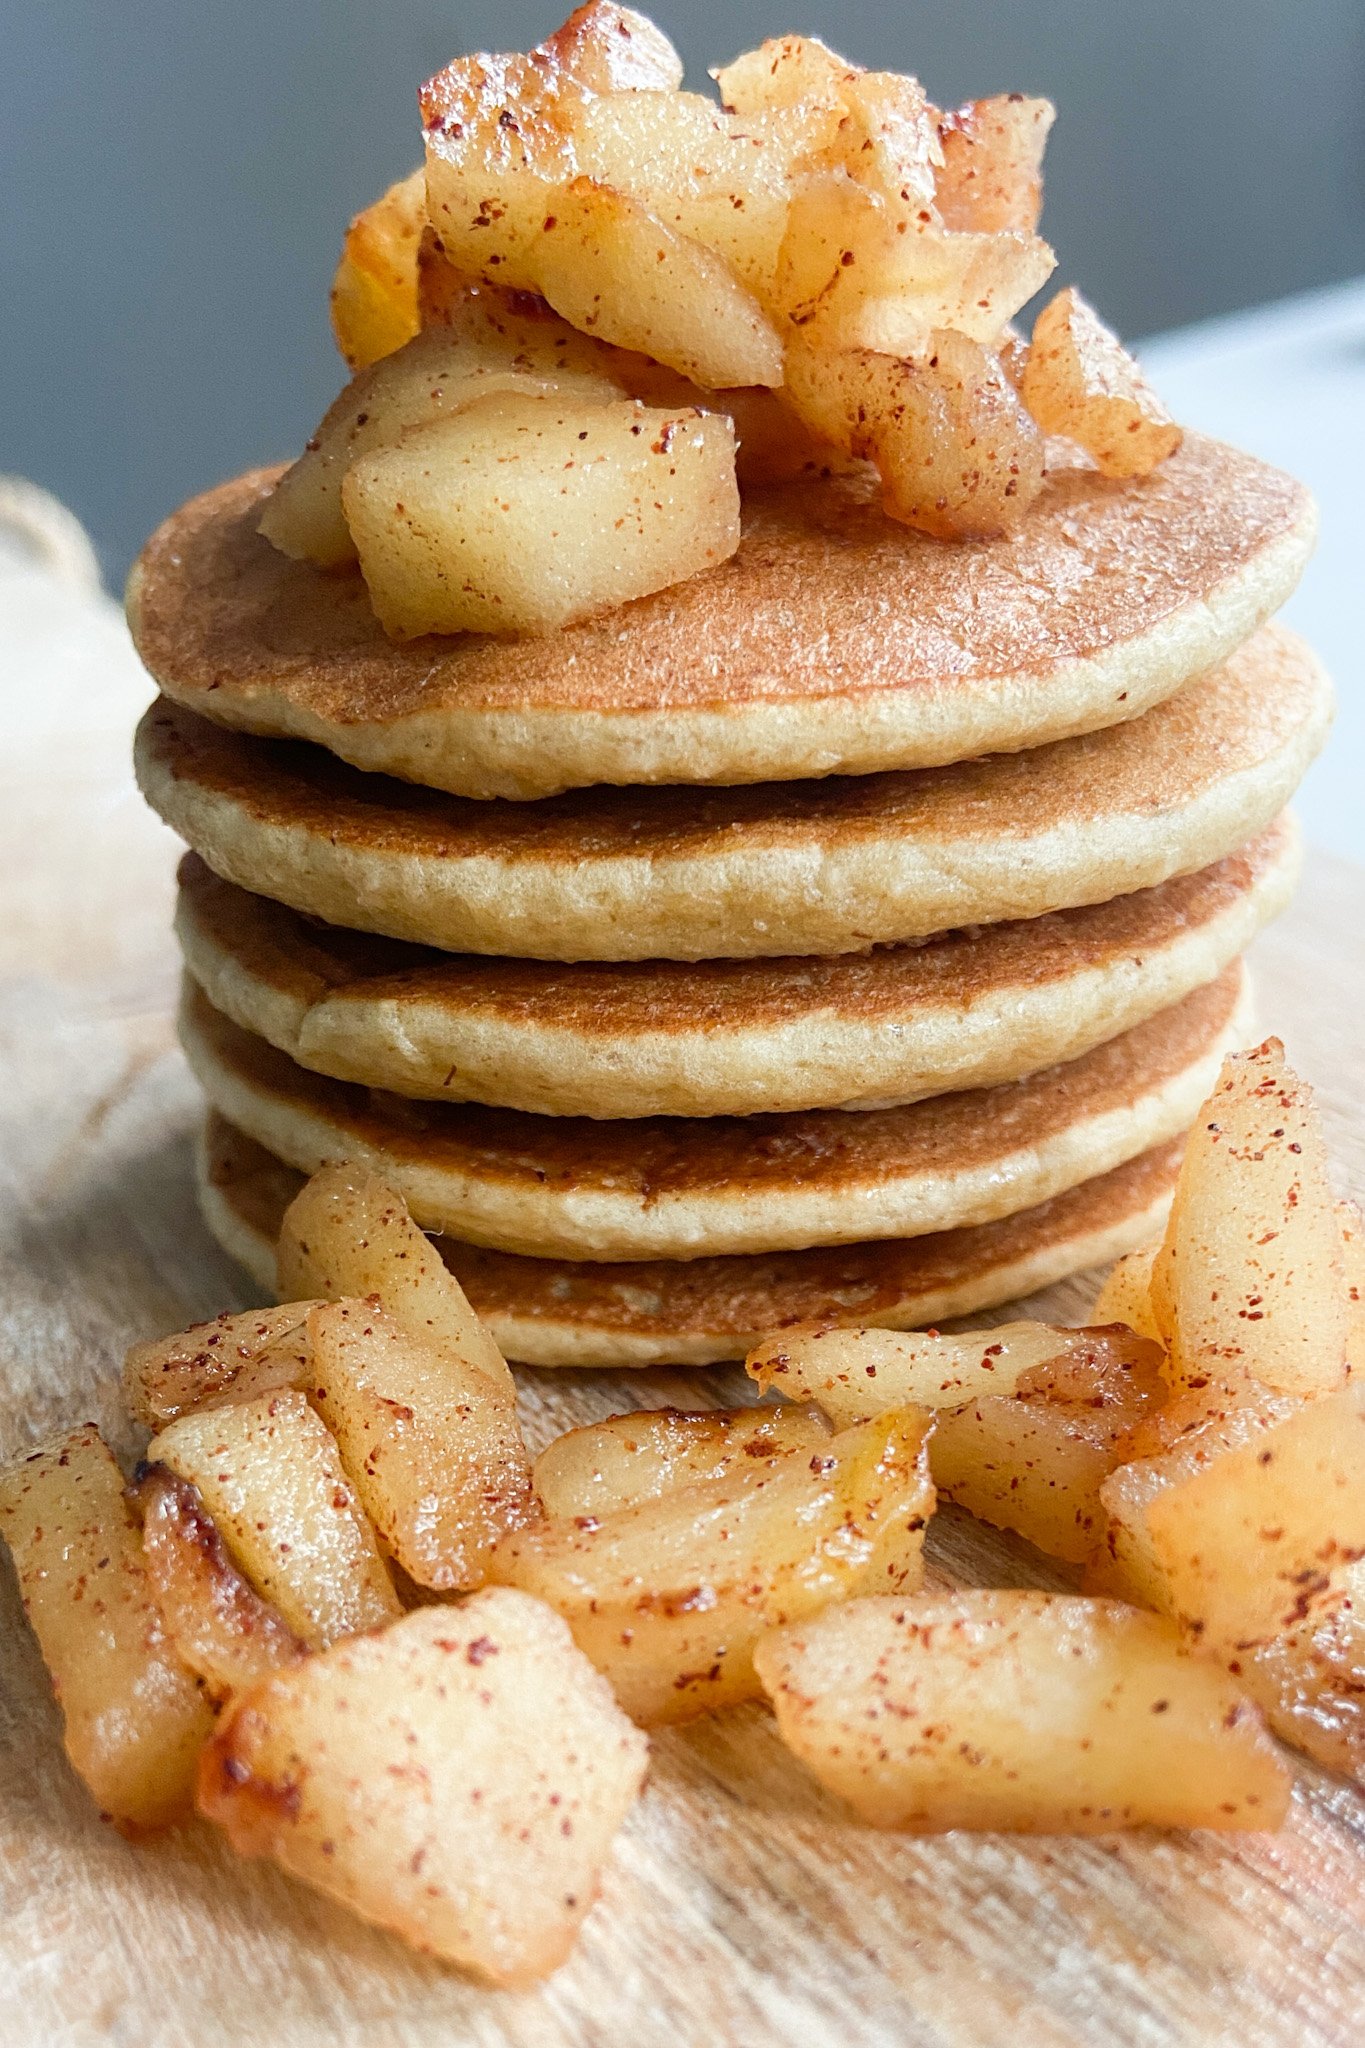 Cinnamon apple pancakes topped with cinnamon apples